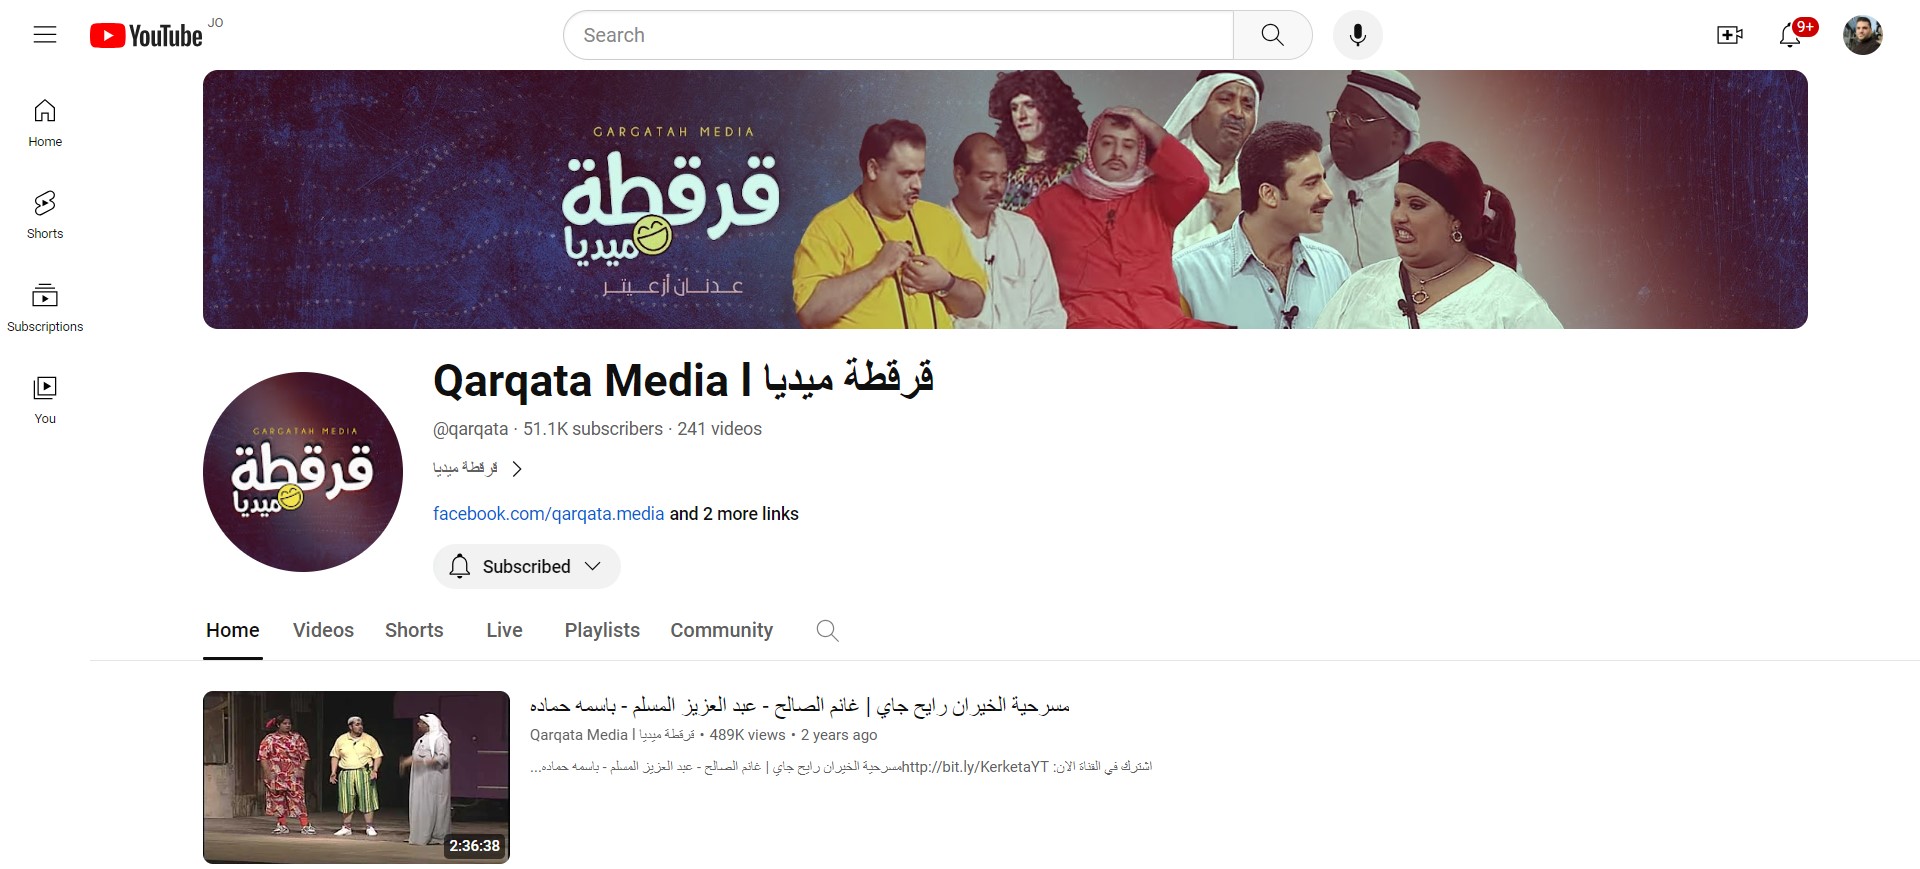 Qarqata Media – YouTube Channel Management